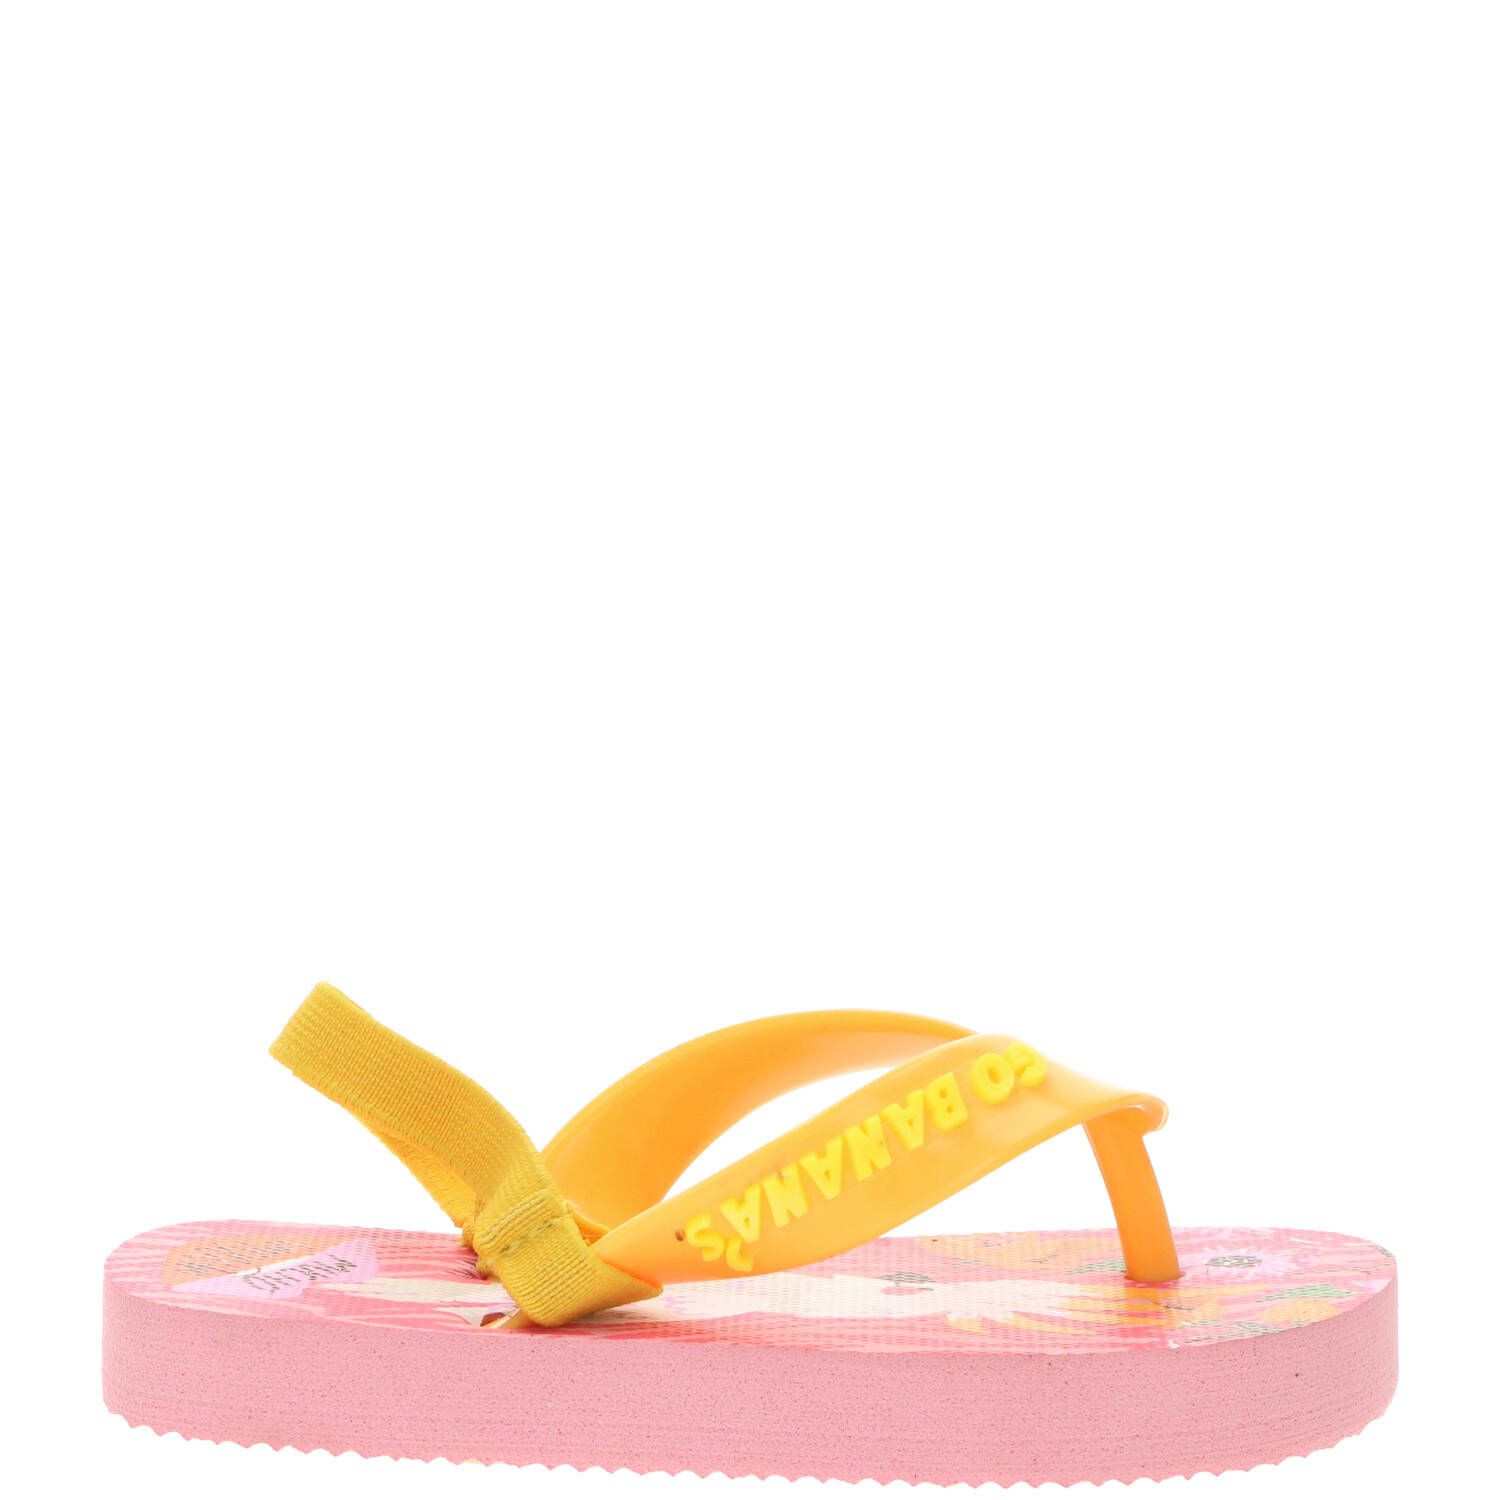 Go Banana's kakatoe slipper, Slippers, Meisje, Maat 30, roze/multi